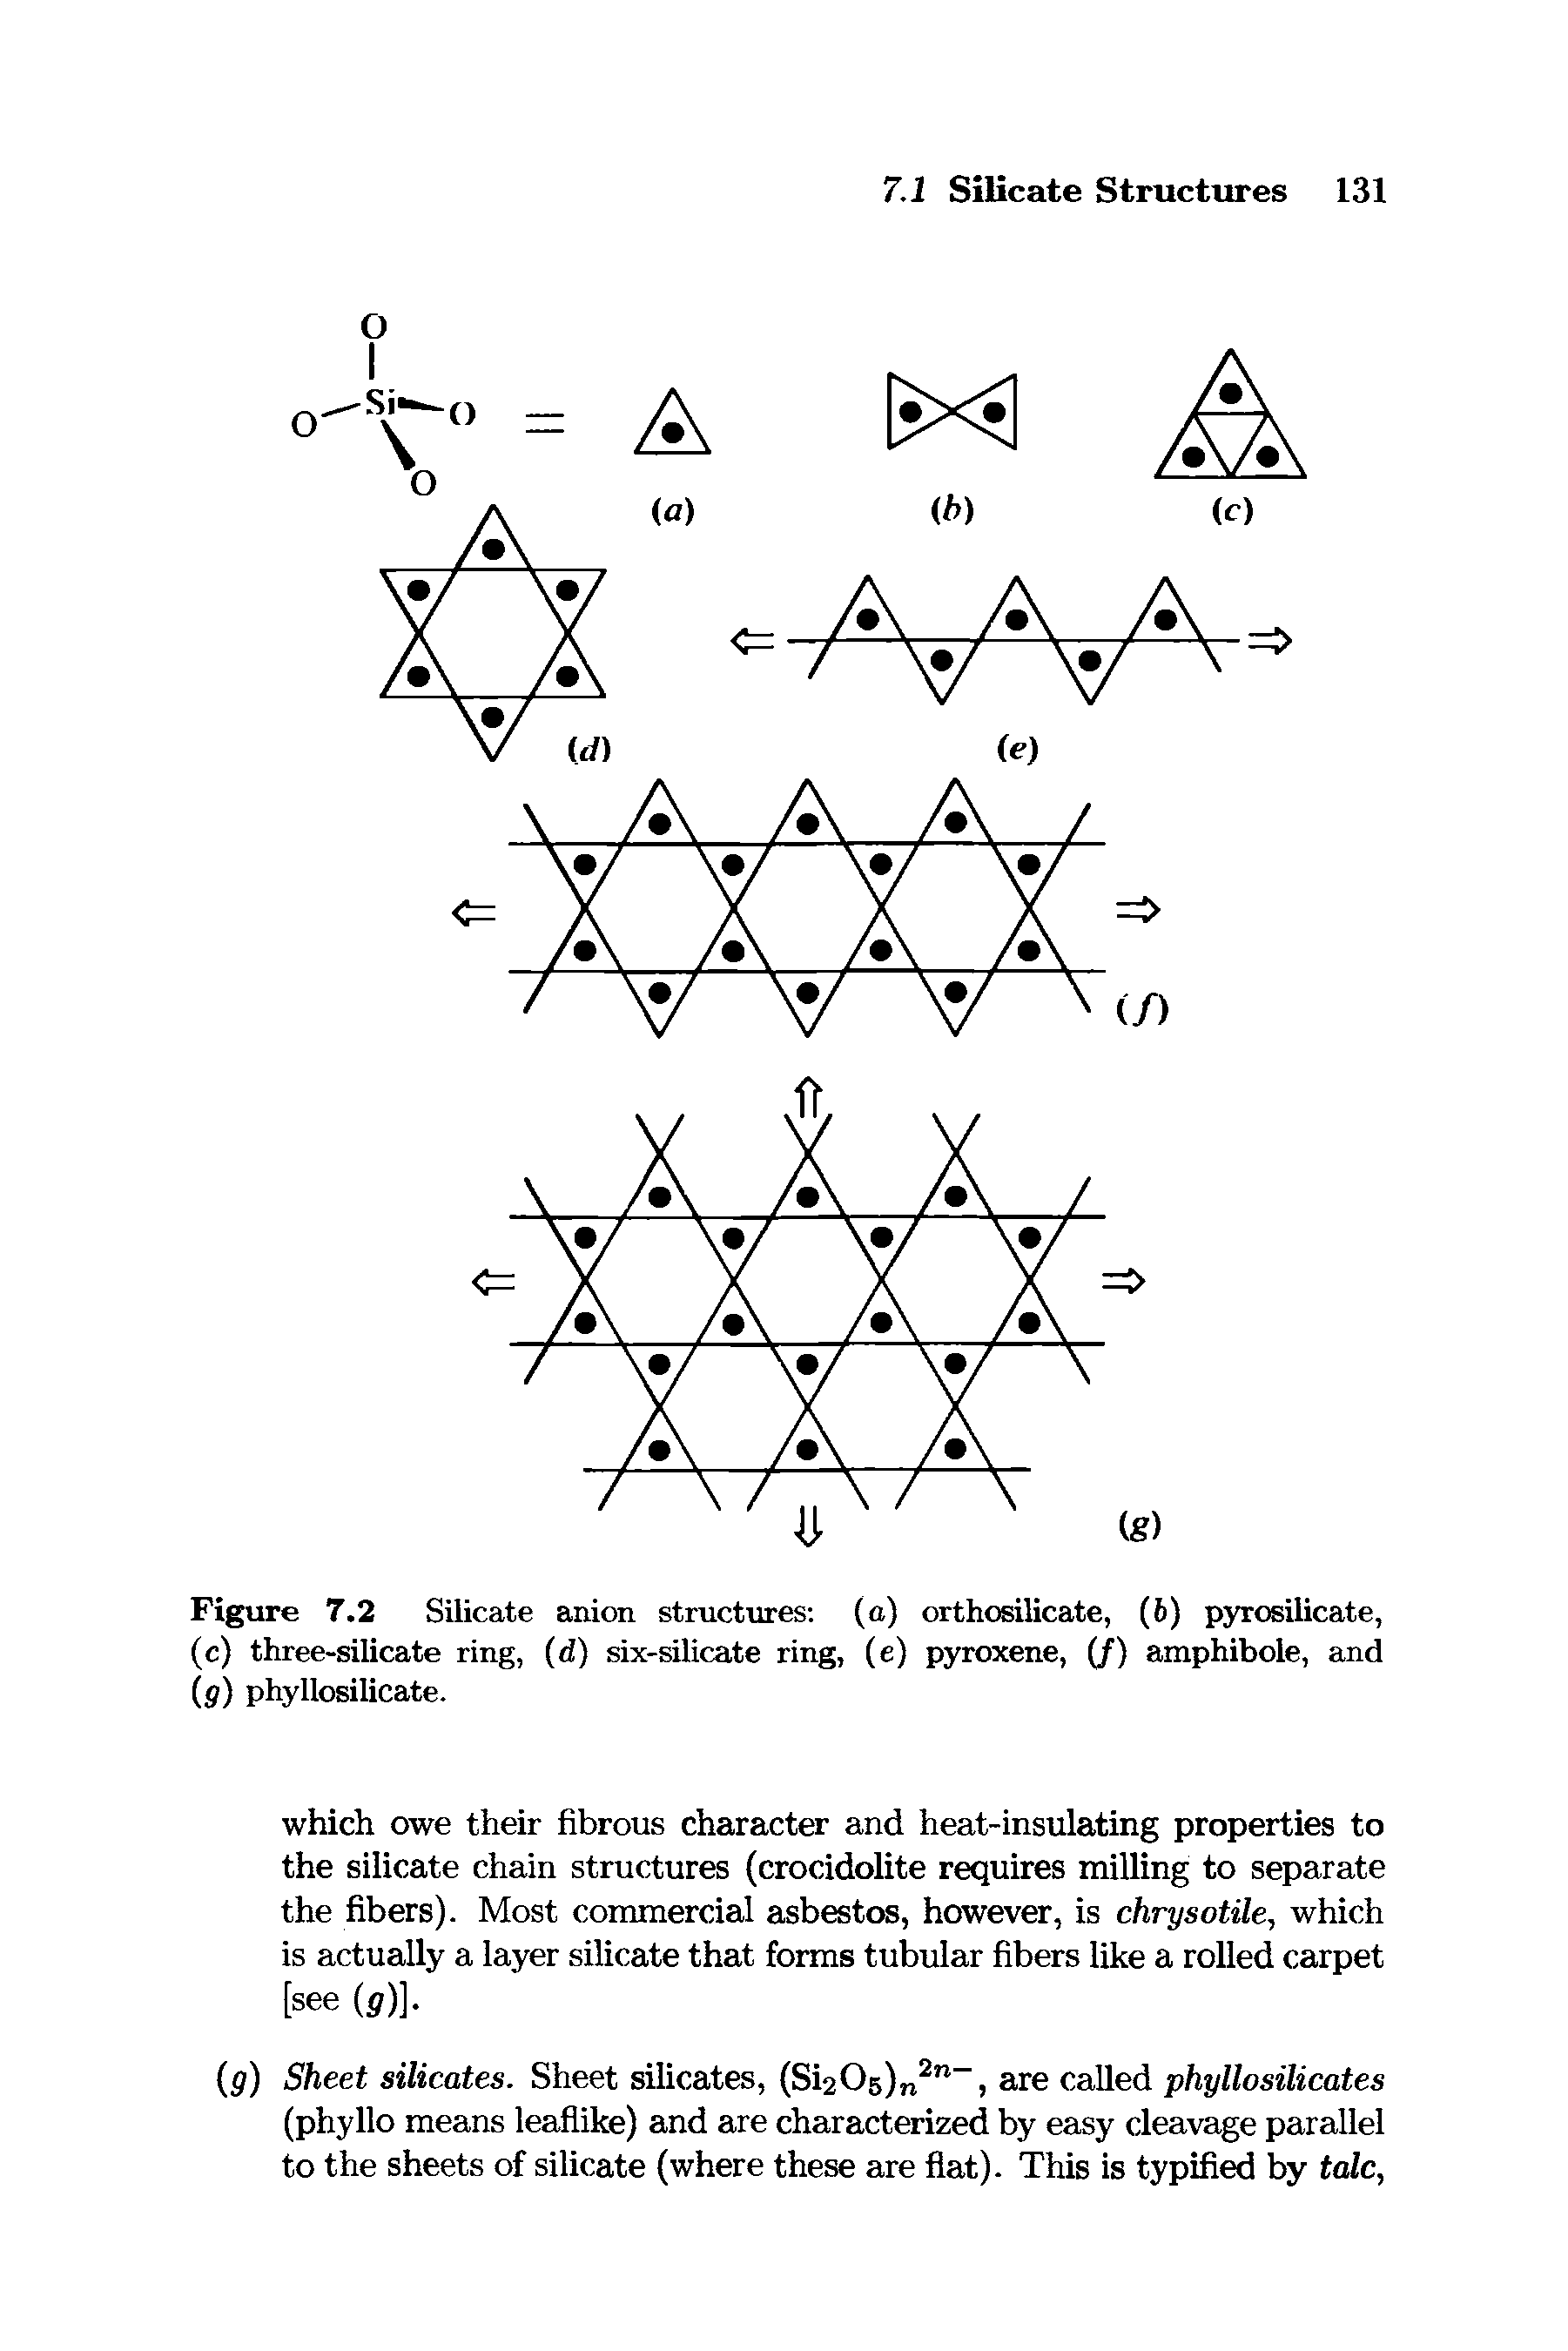 Figure 7.2 Silicate anion structures (o) orthosilicate, (6) pyrosilicate, (c) three-silicate ring, (d) six-silicate ring, (e) pyroxene, (/) amphibole, and (g) phyllosilicate.